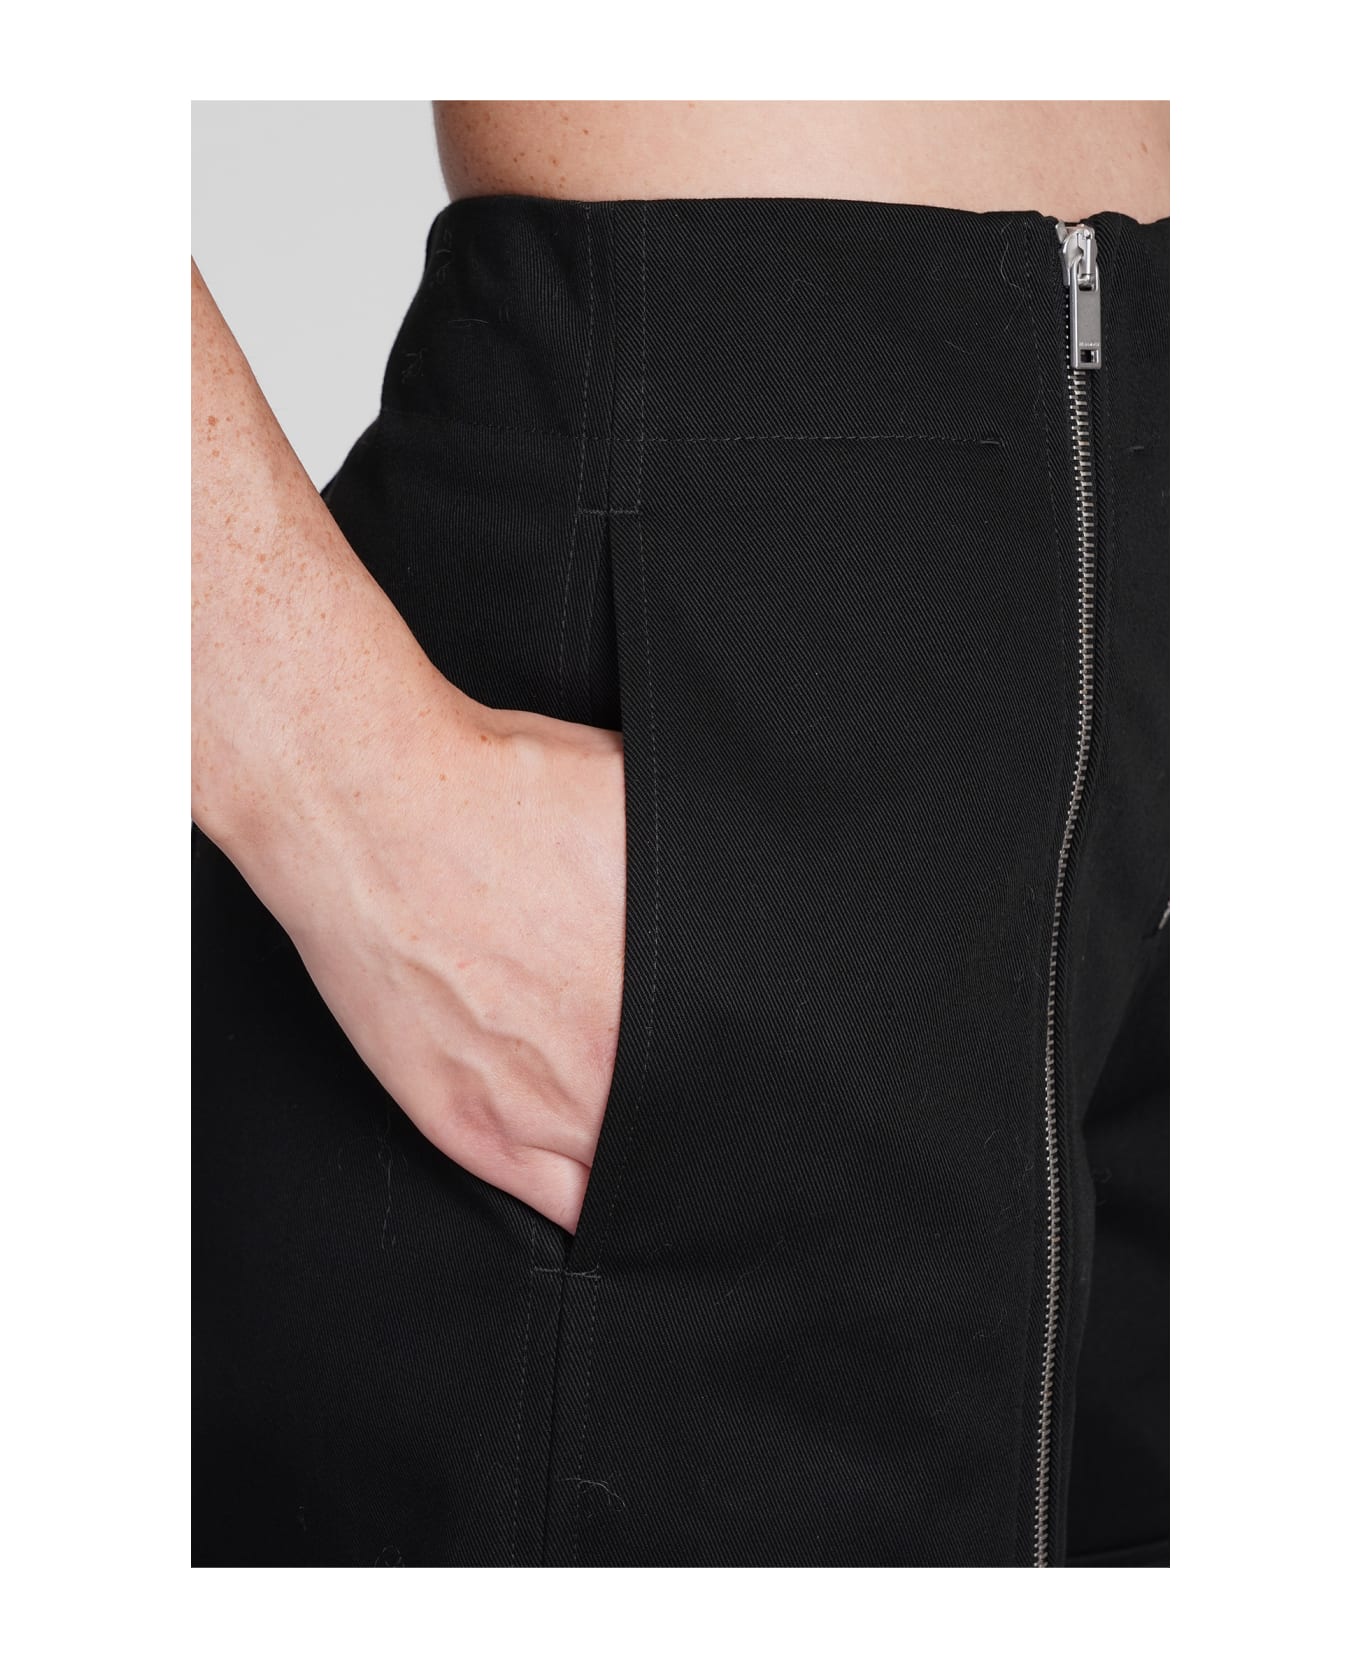 Jil Sander Multi Zip Trousers - black